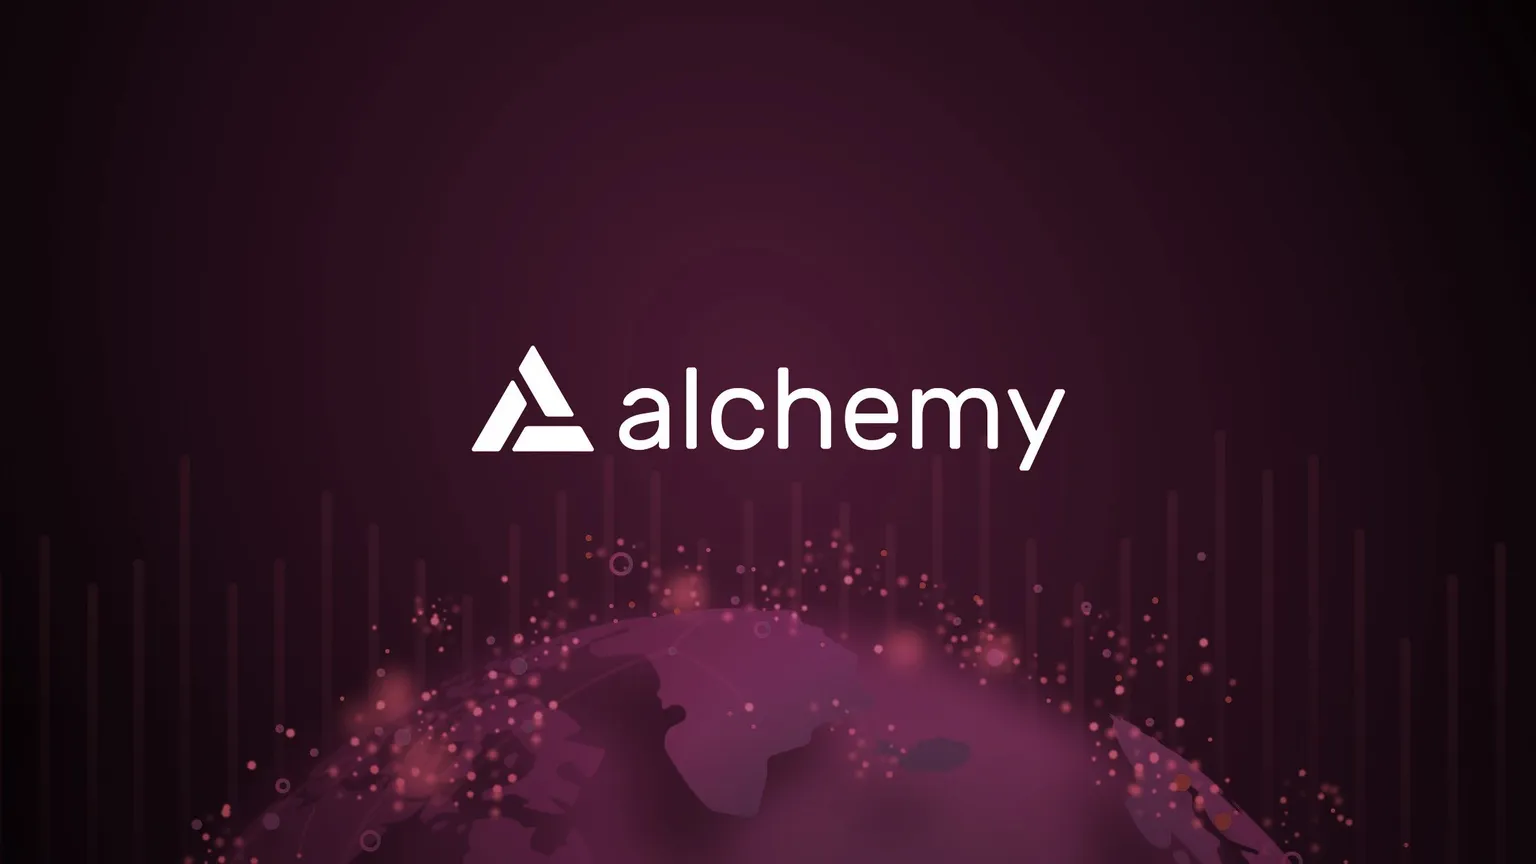 Image: Alchemy